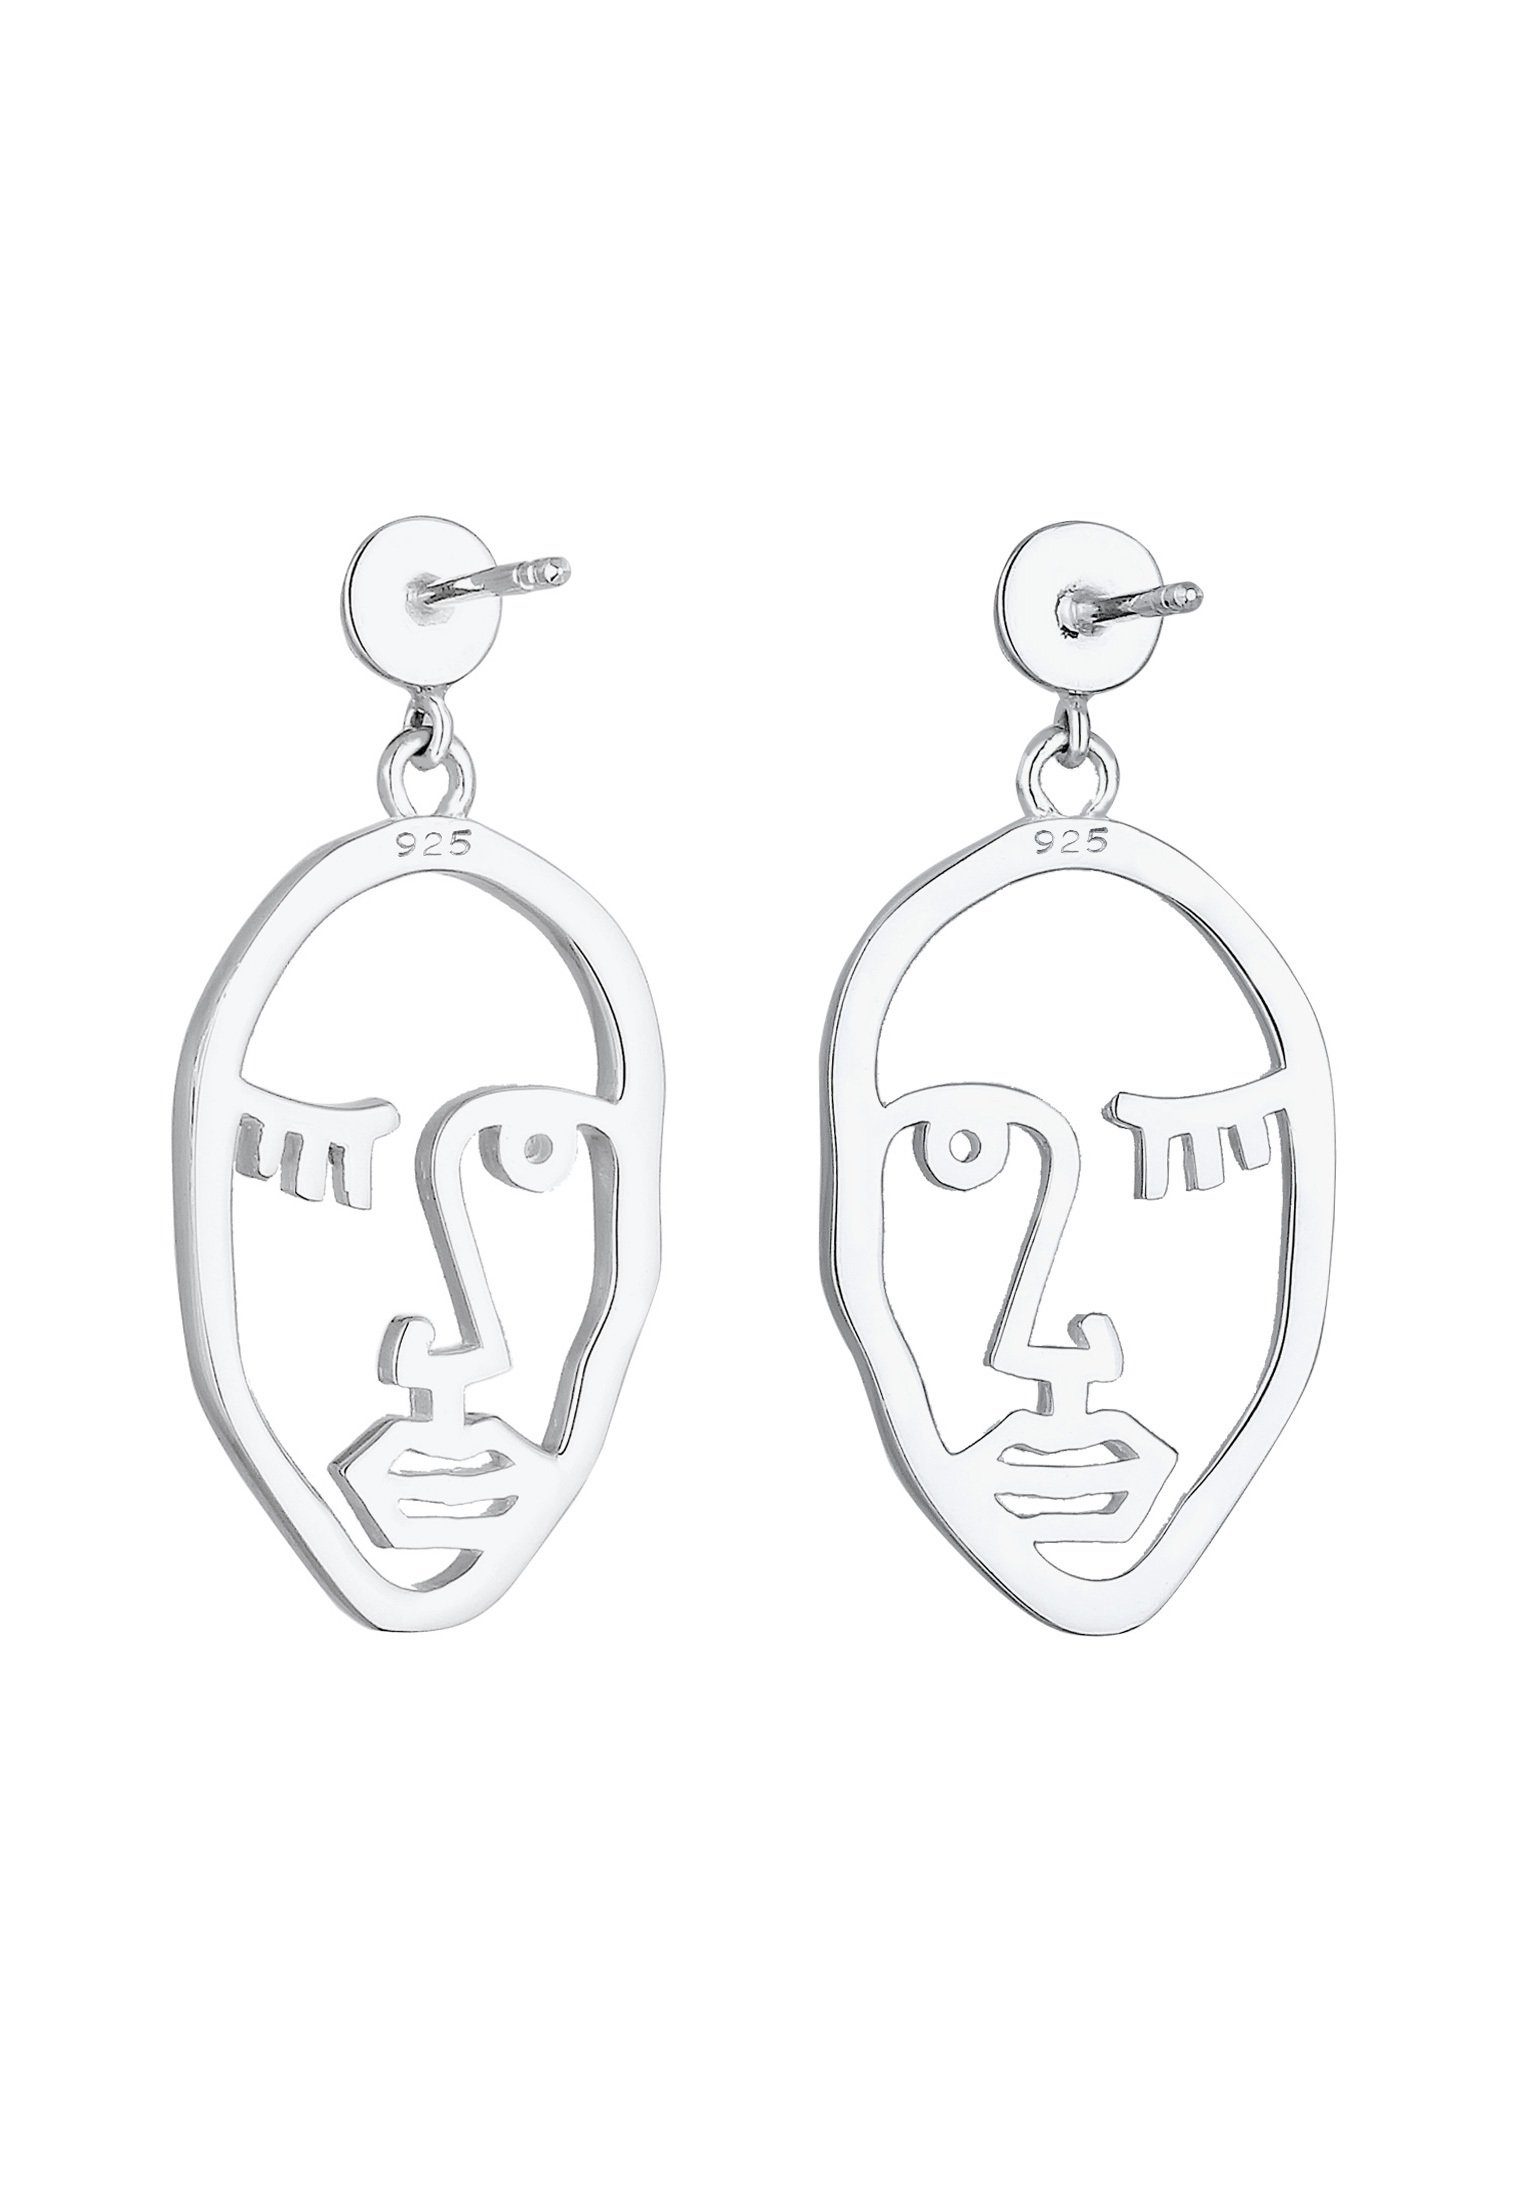 Elli Paar Ohrhänger 925 Design Silber Gesicht Trend Blogger Ohrhänger